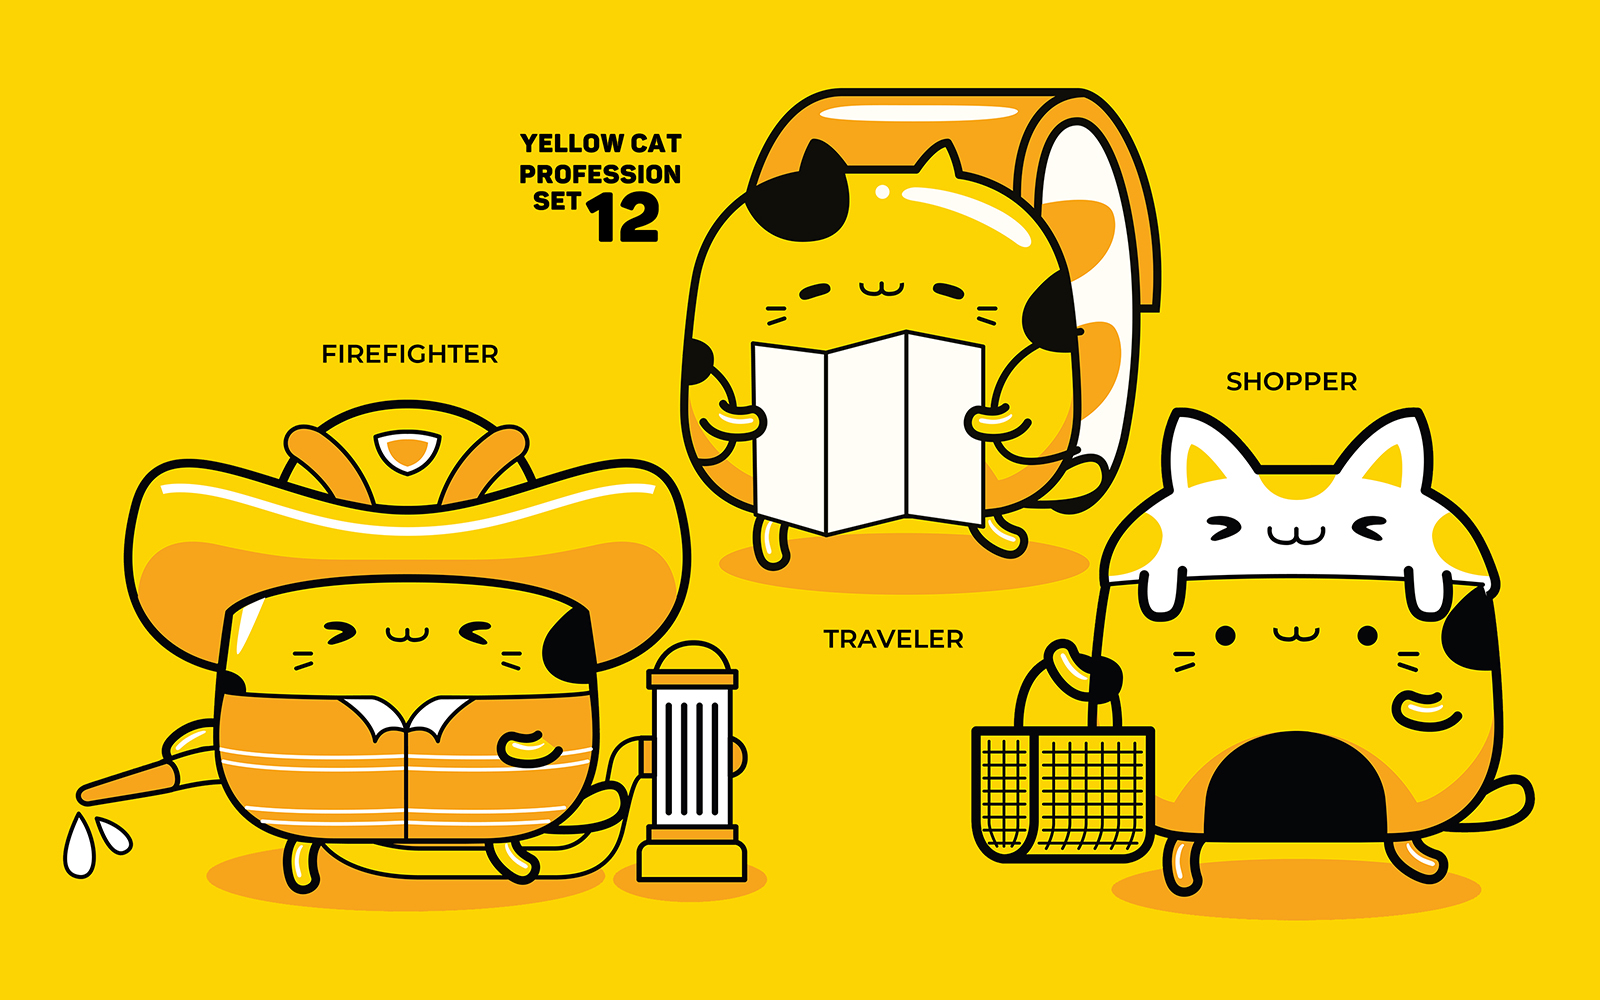 Yellow Cat Profession Set #12